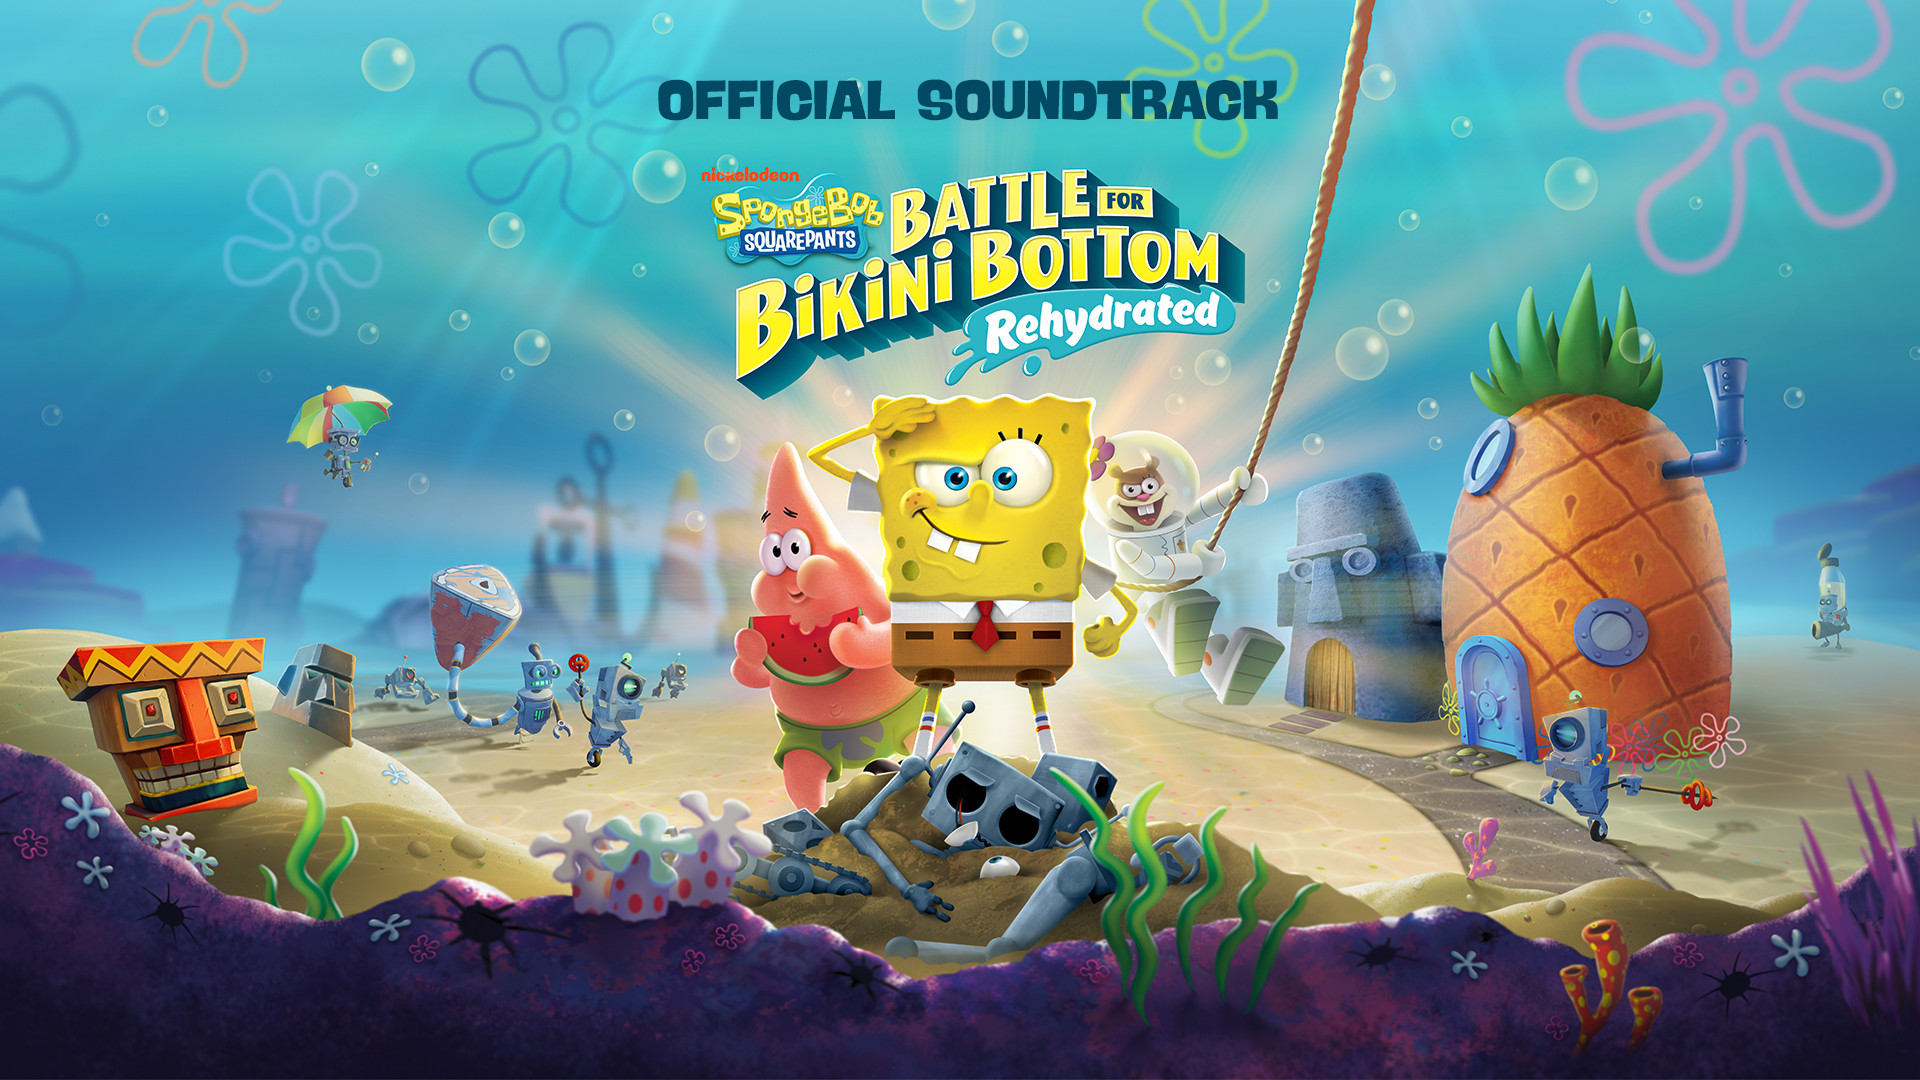 SpongeBob SquarePants: Battle for Bikini Bottom - Rehydrated Soundtrack Steam CD Key, 4.43 usd